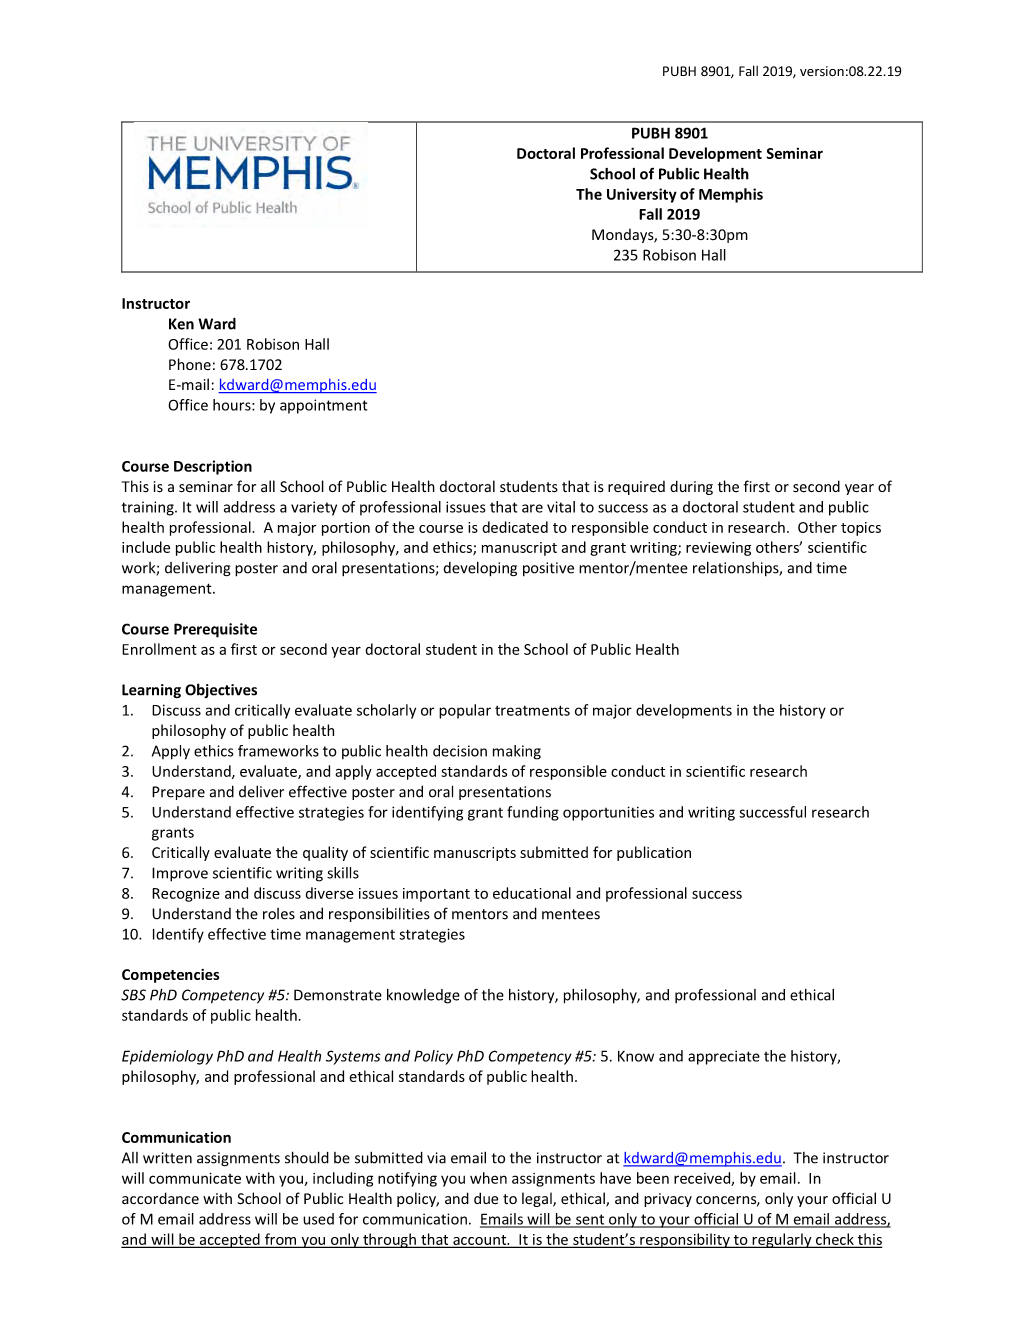 PUBH 8901 Doctoral Professional Development Seminar School of Public Health the University of Memphis Fall 2019